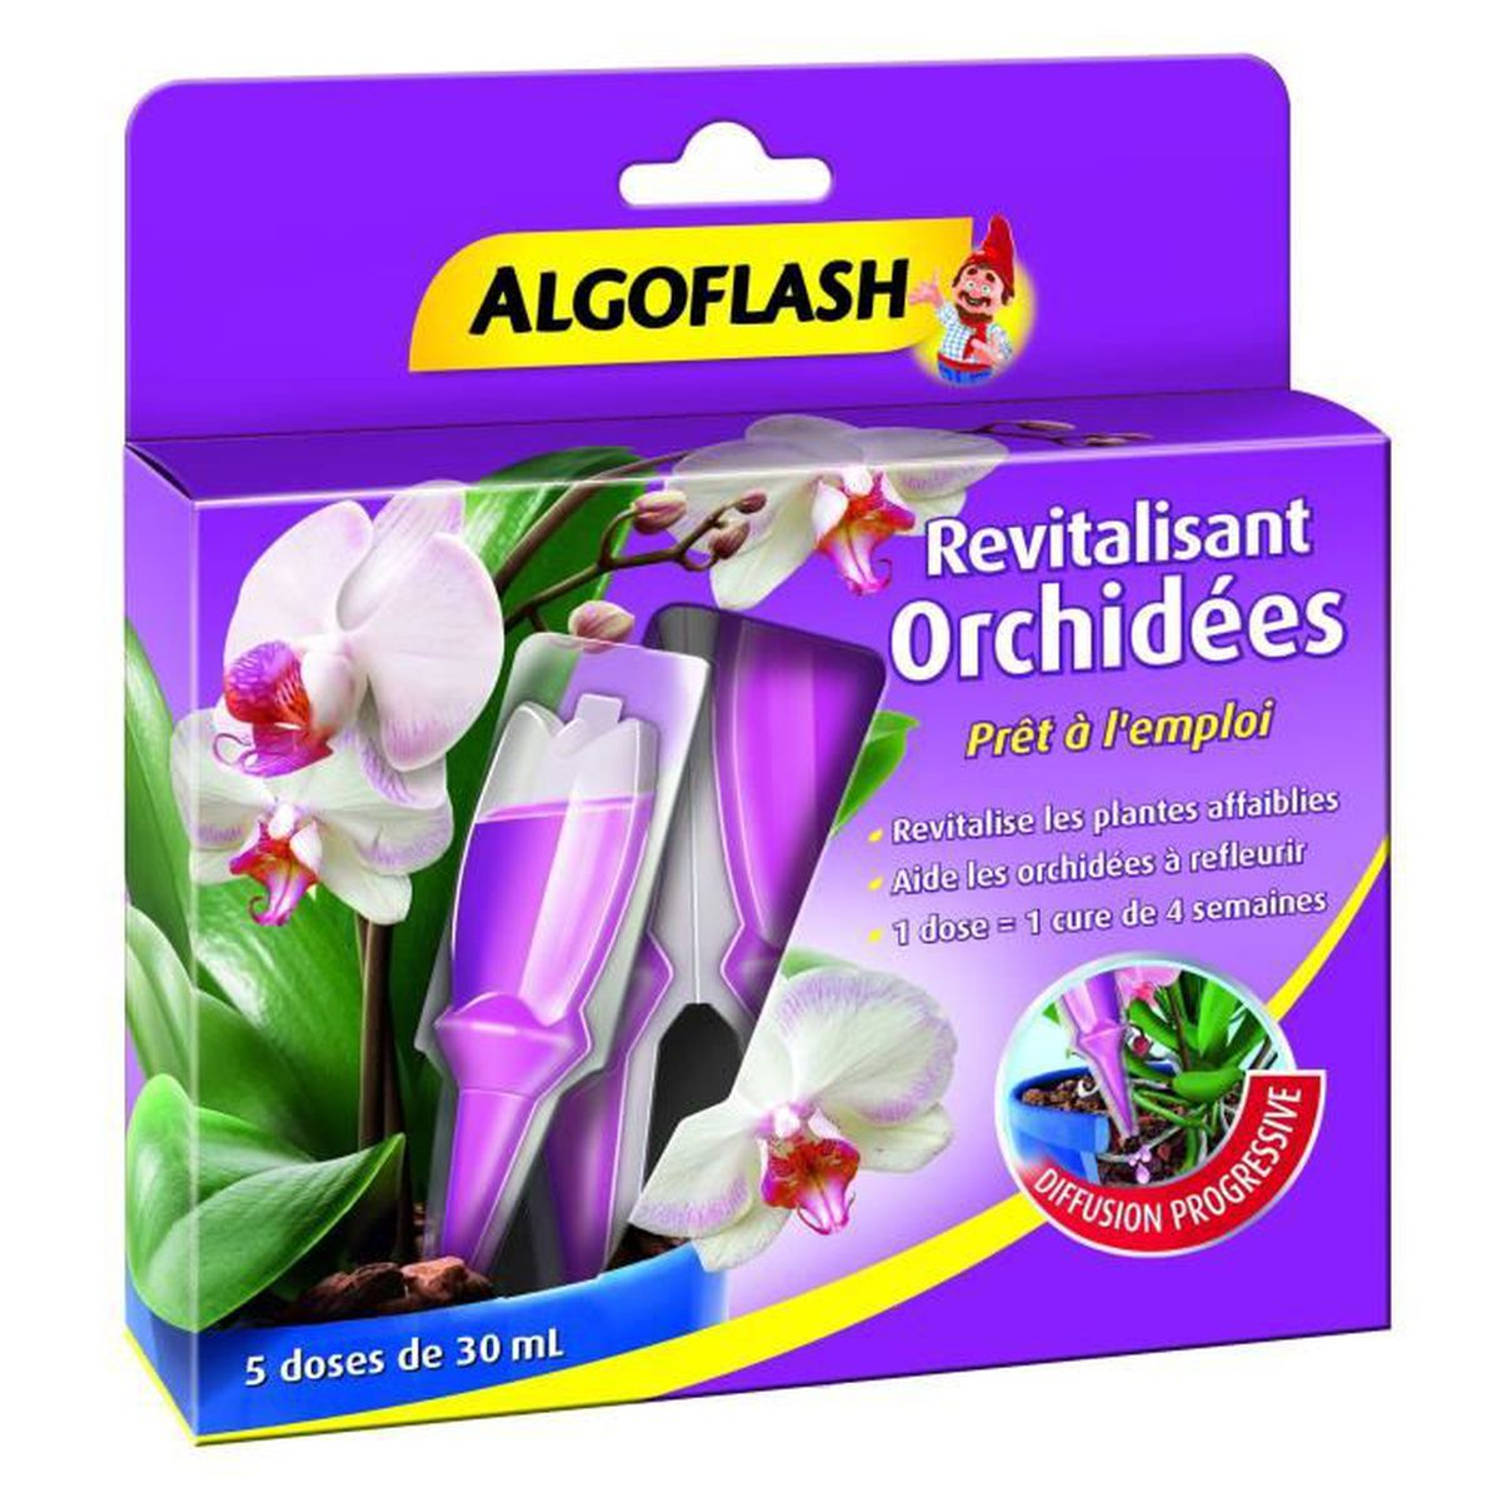 ALGOFLASH Orchideeën revitaliserende monodosis - 30 ml